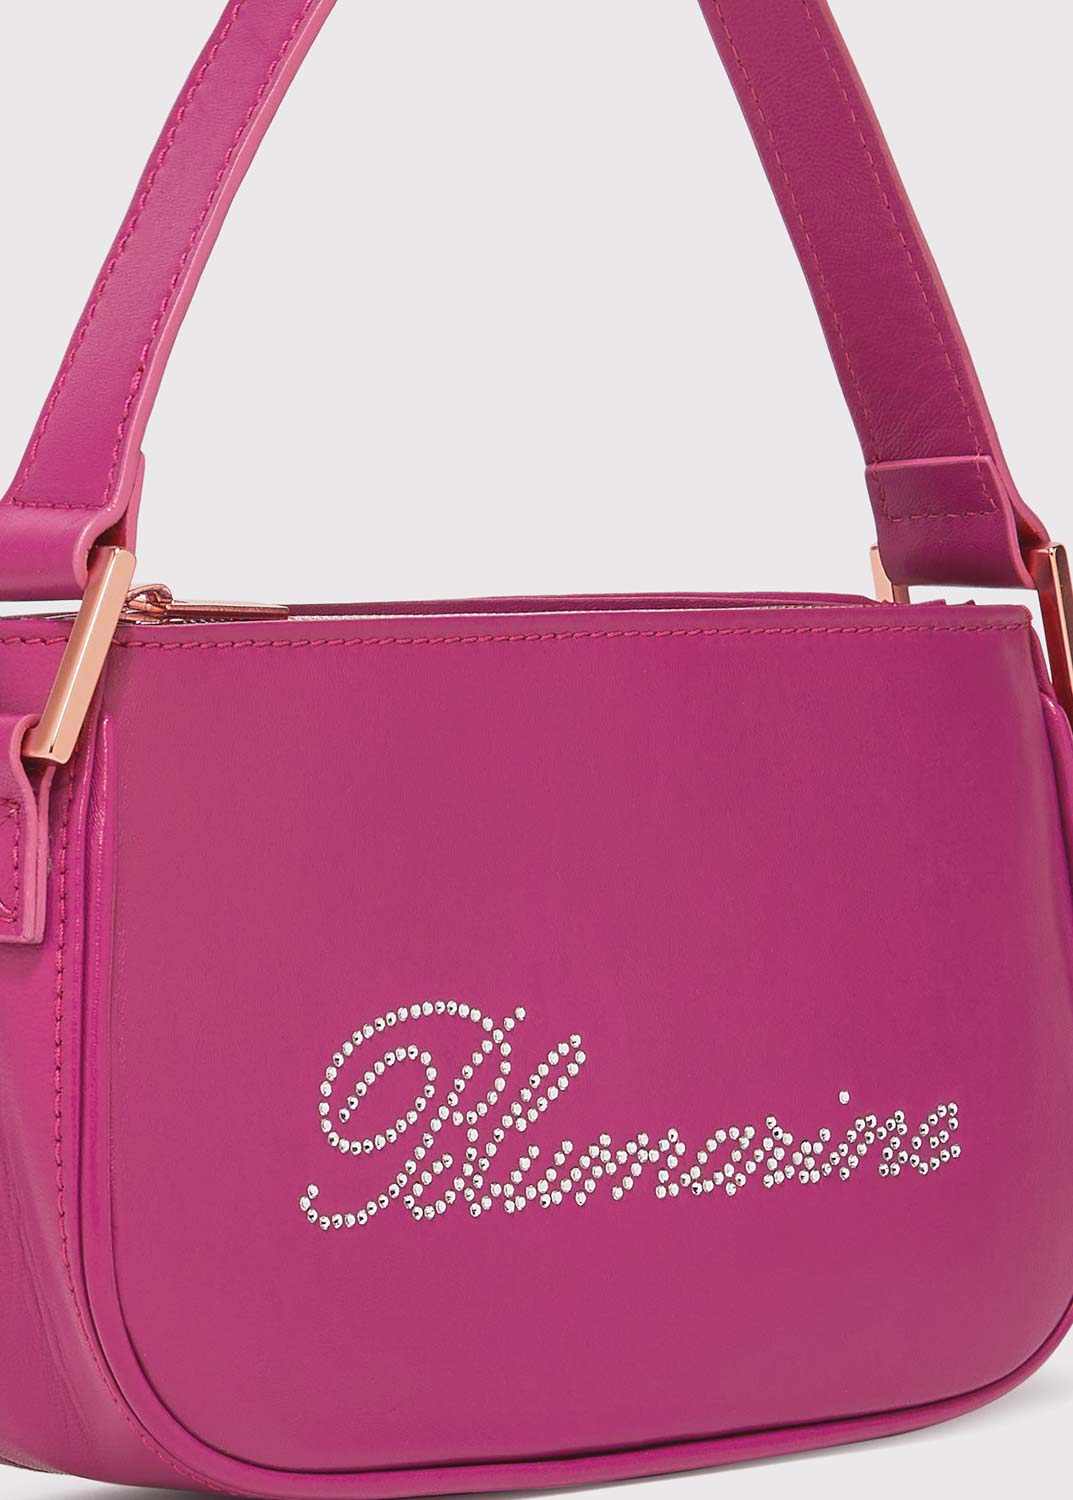 Blumarine Mini Kiss Me Bag in Patent Leather